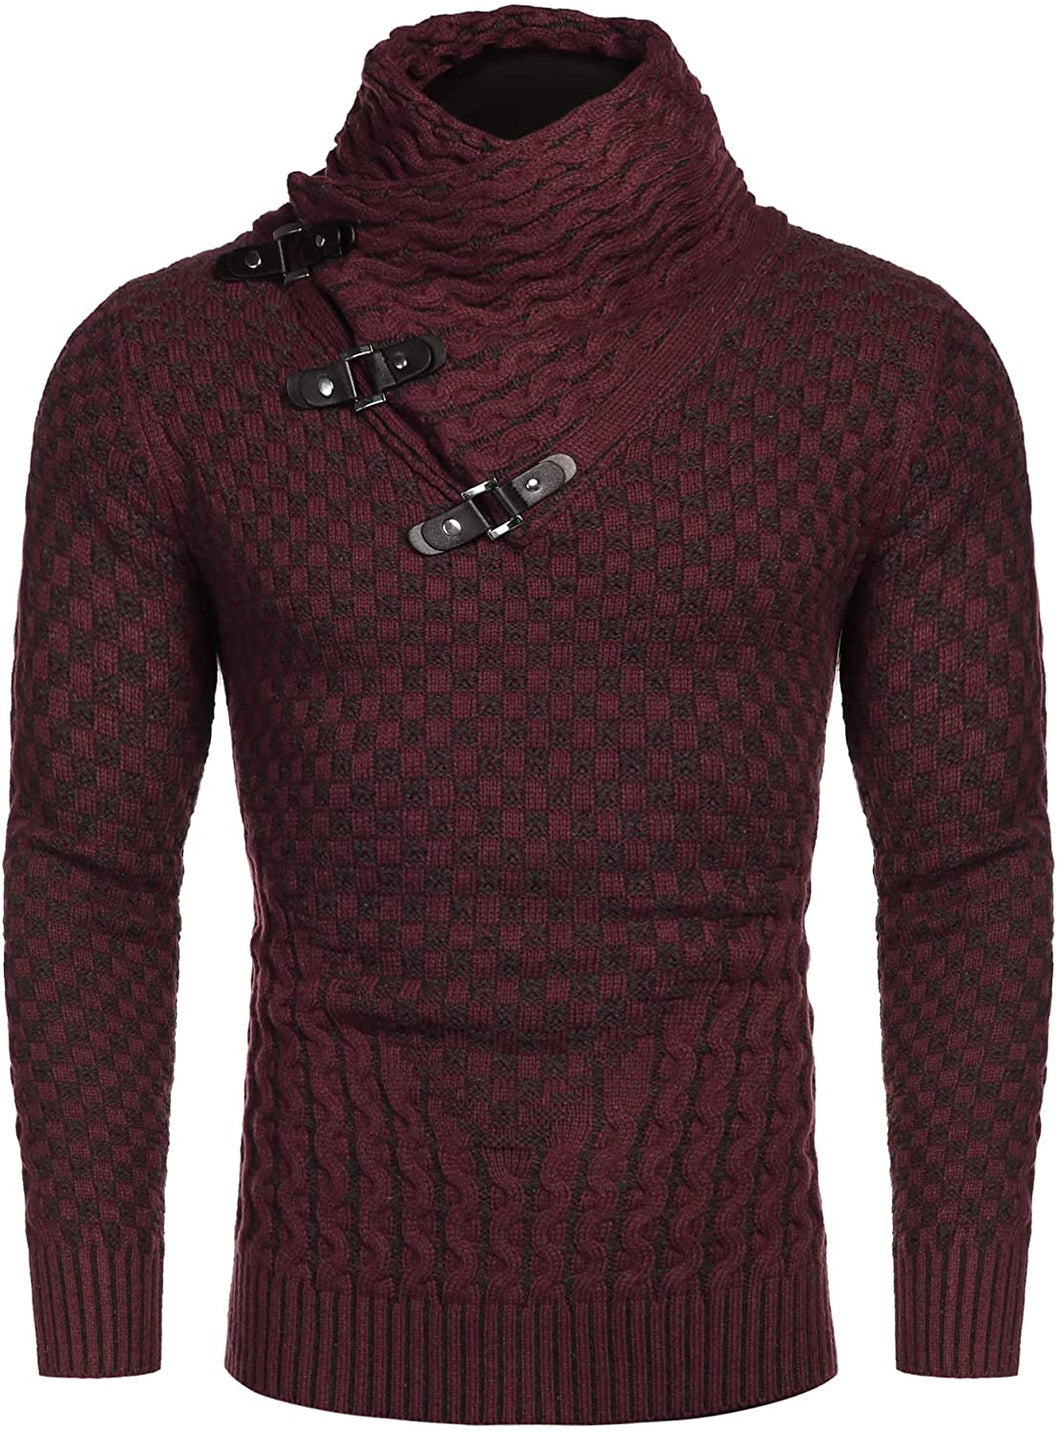 Wine Red Long Sleeve Slim Fit Designer Knitted Turtleneck Sweater